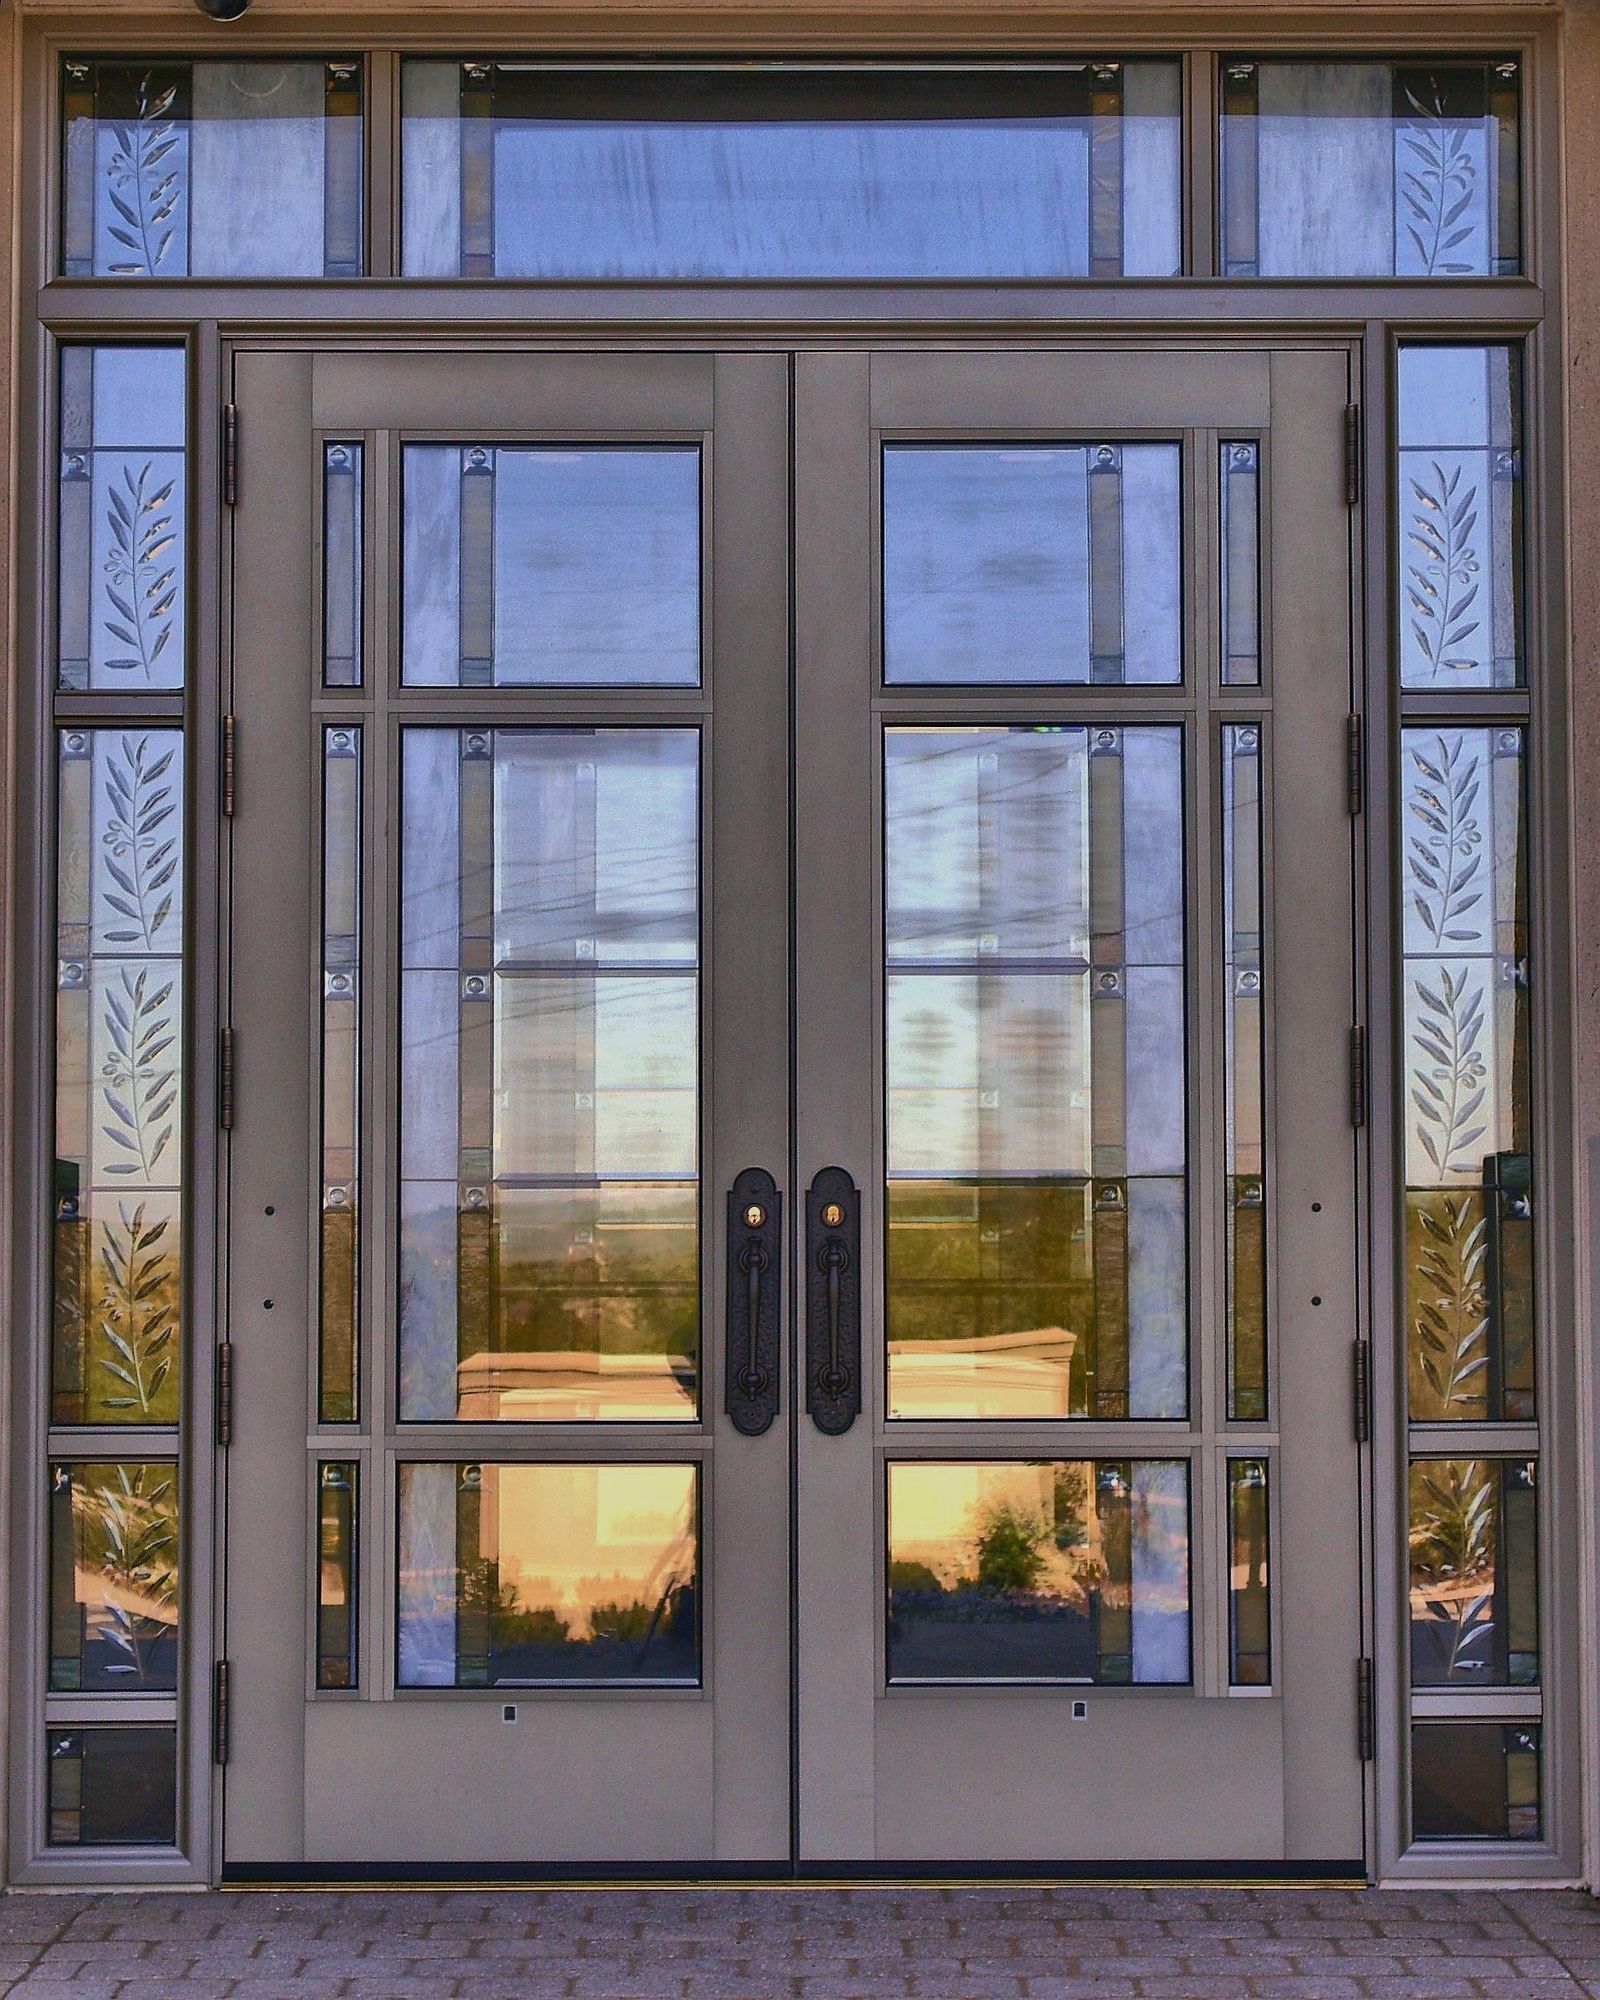 A view of the Kansas City Missouri Temple doors.